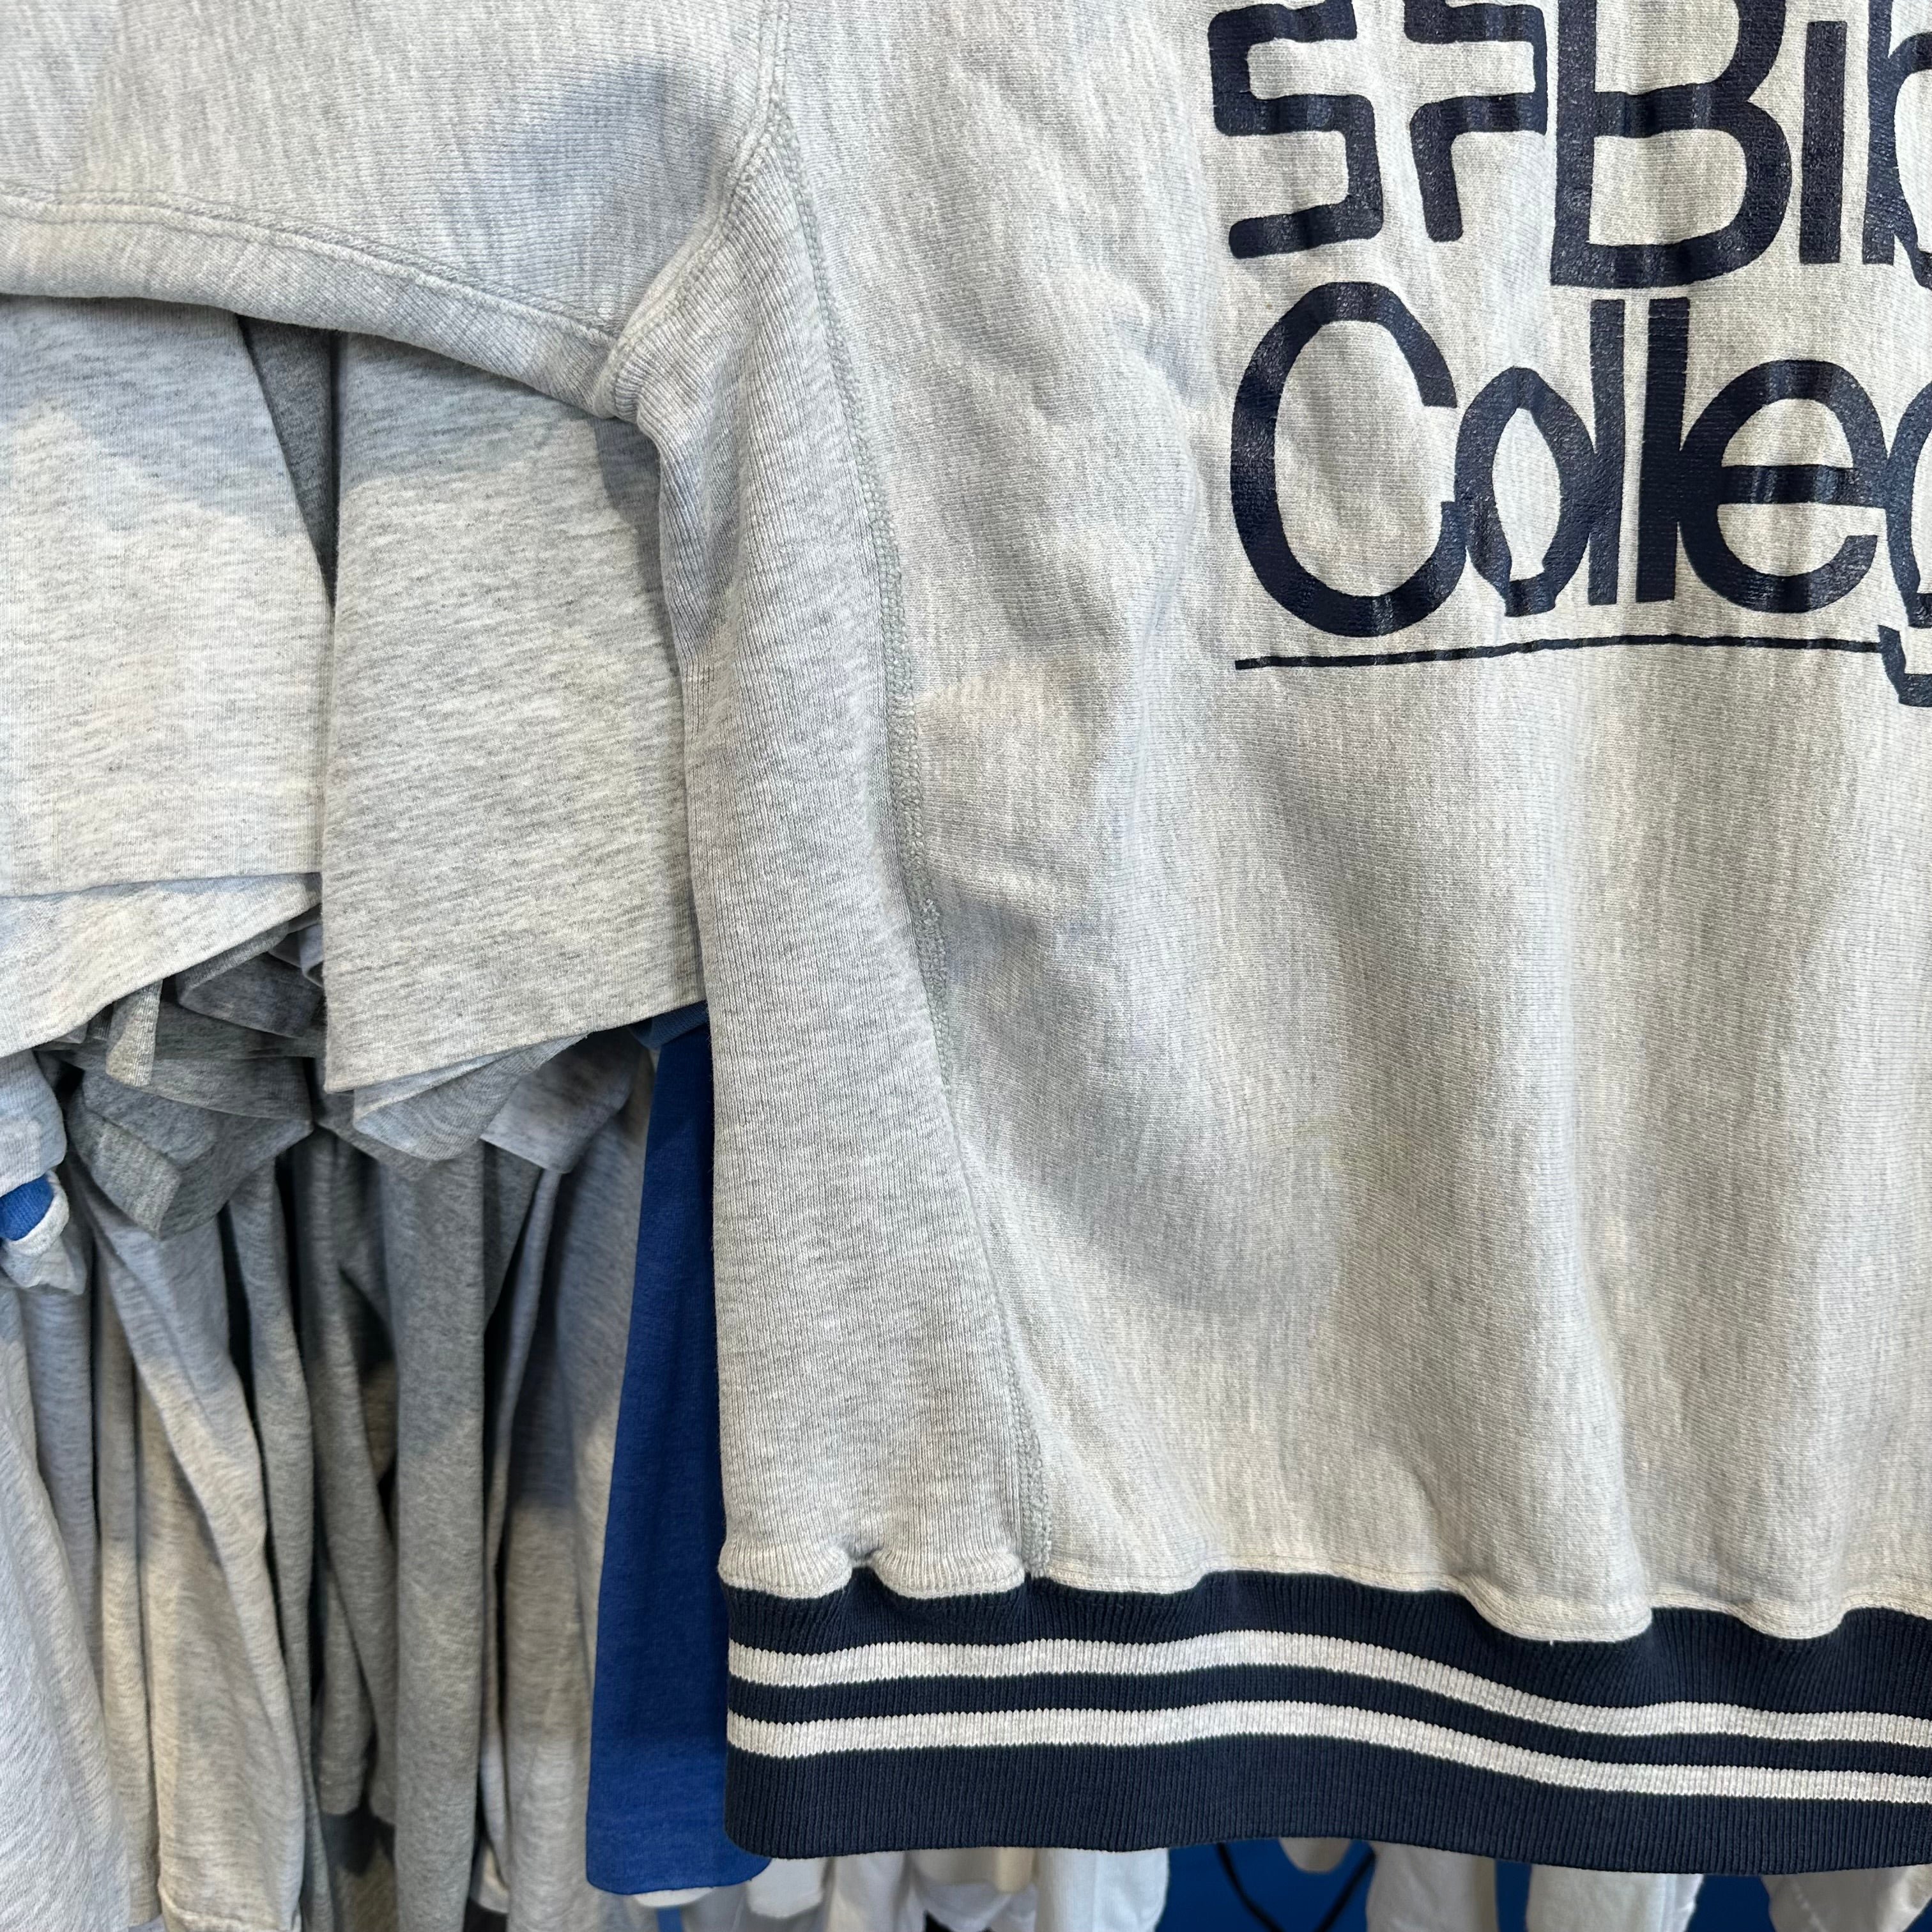 St. Paul Bible College Reverse Weave Crewneck Sweatshirt